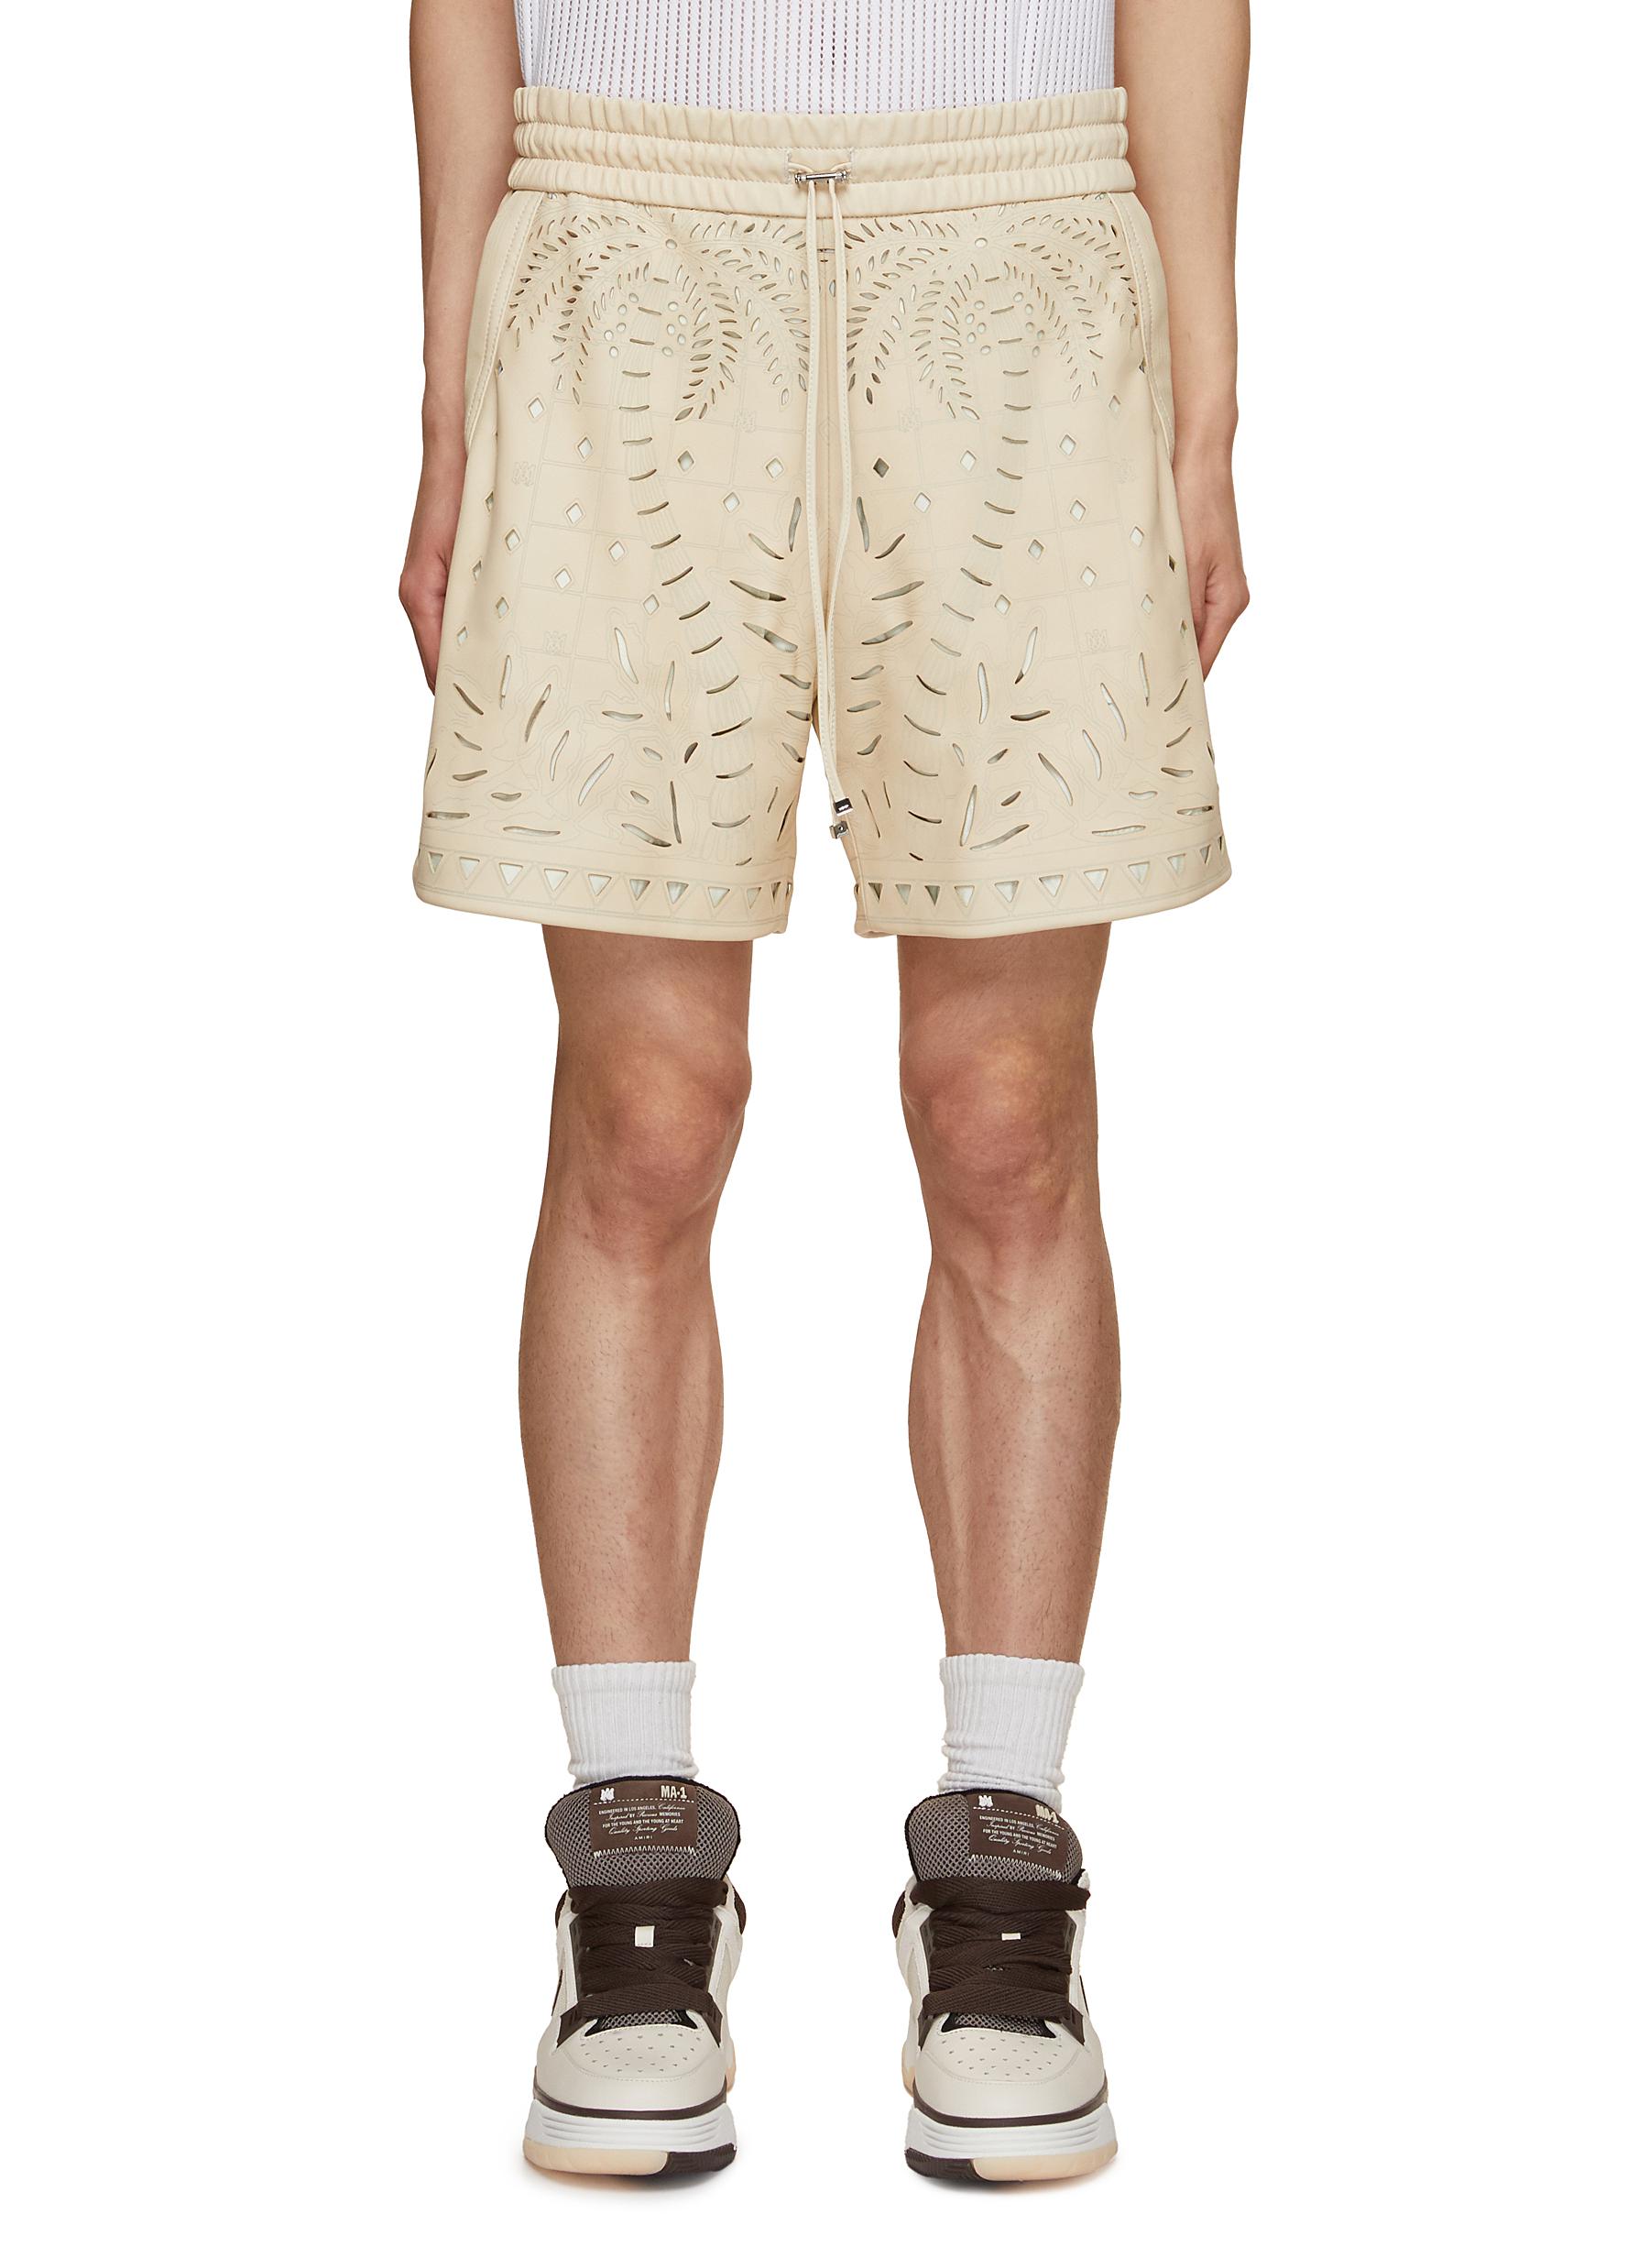 Palm Tree Cutout Leather Shorts